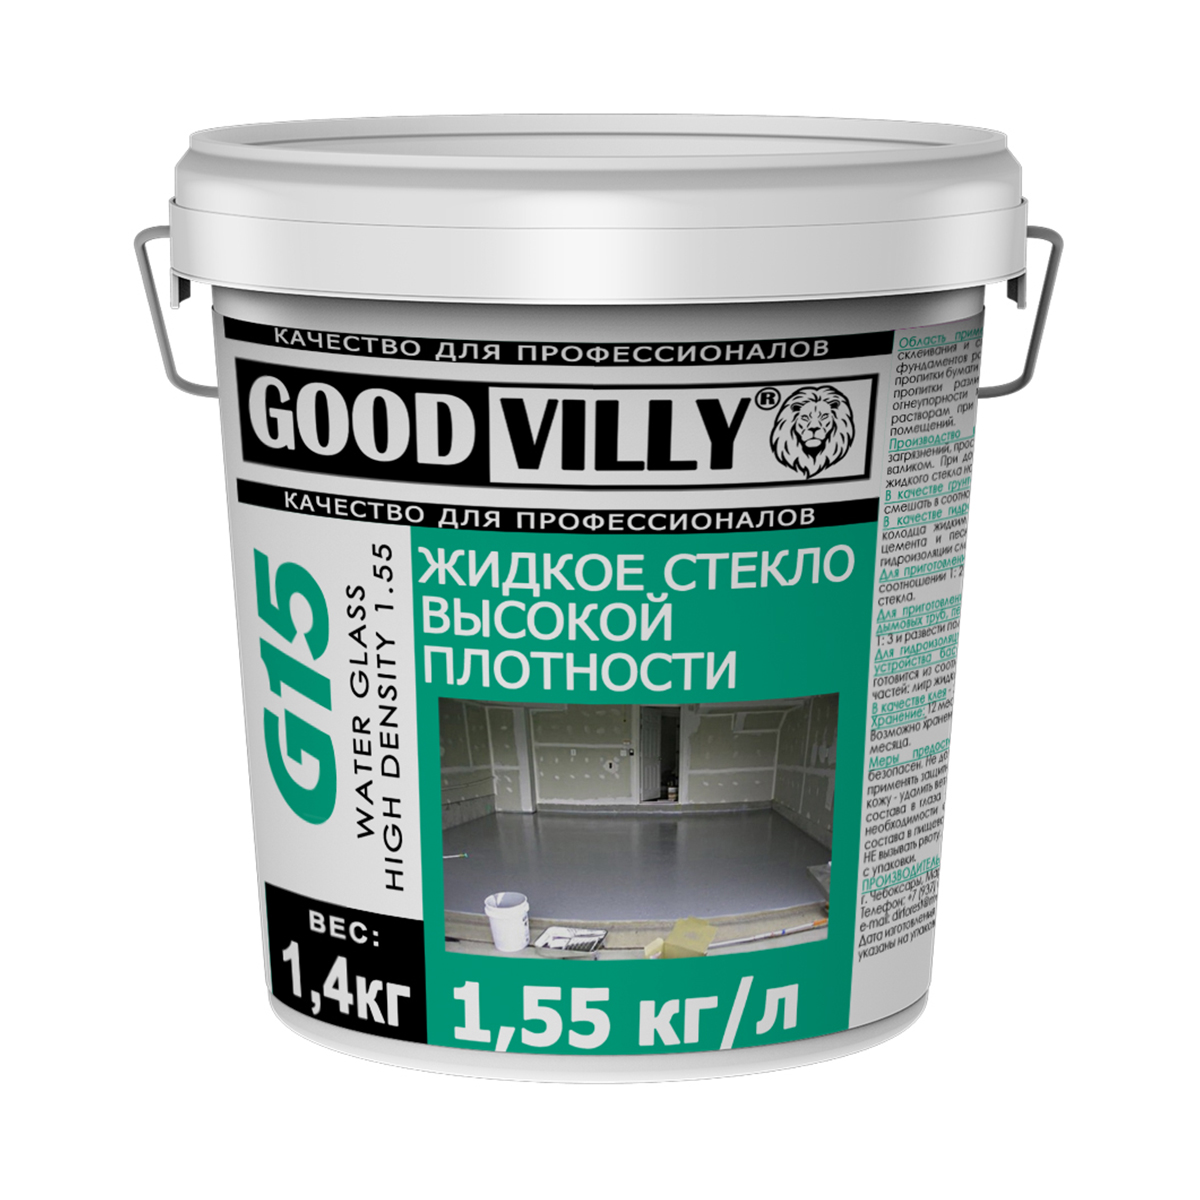 Жидкое стекло g15  1,4 кг (1/20) "good villy"